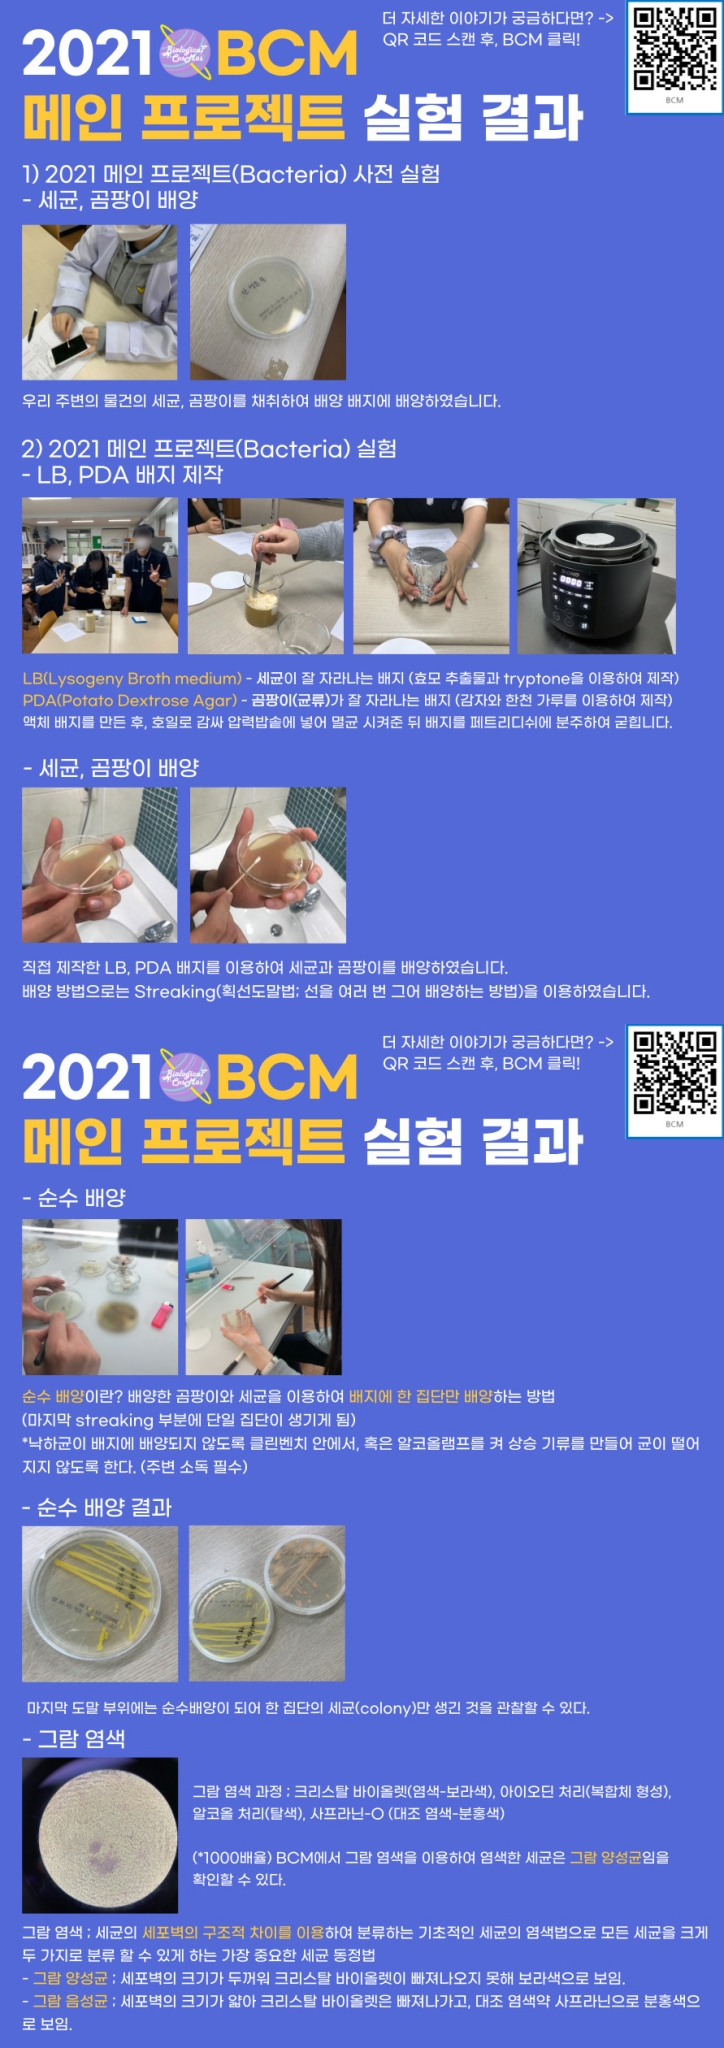 BCM 메인 프로젝트